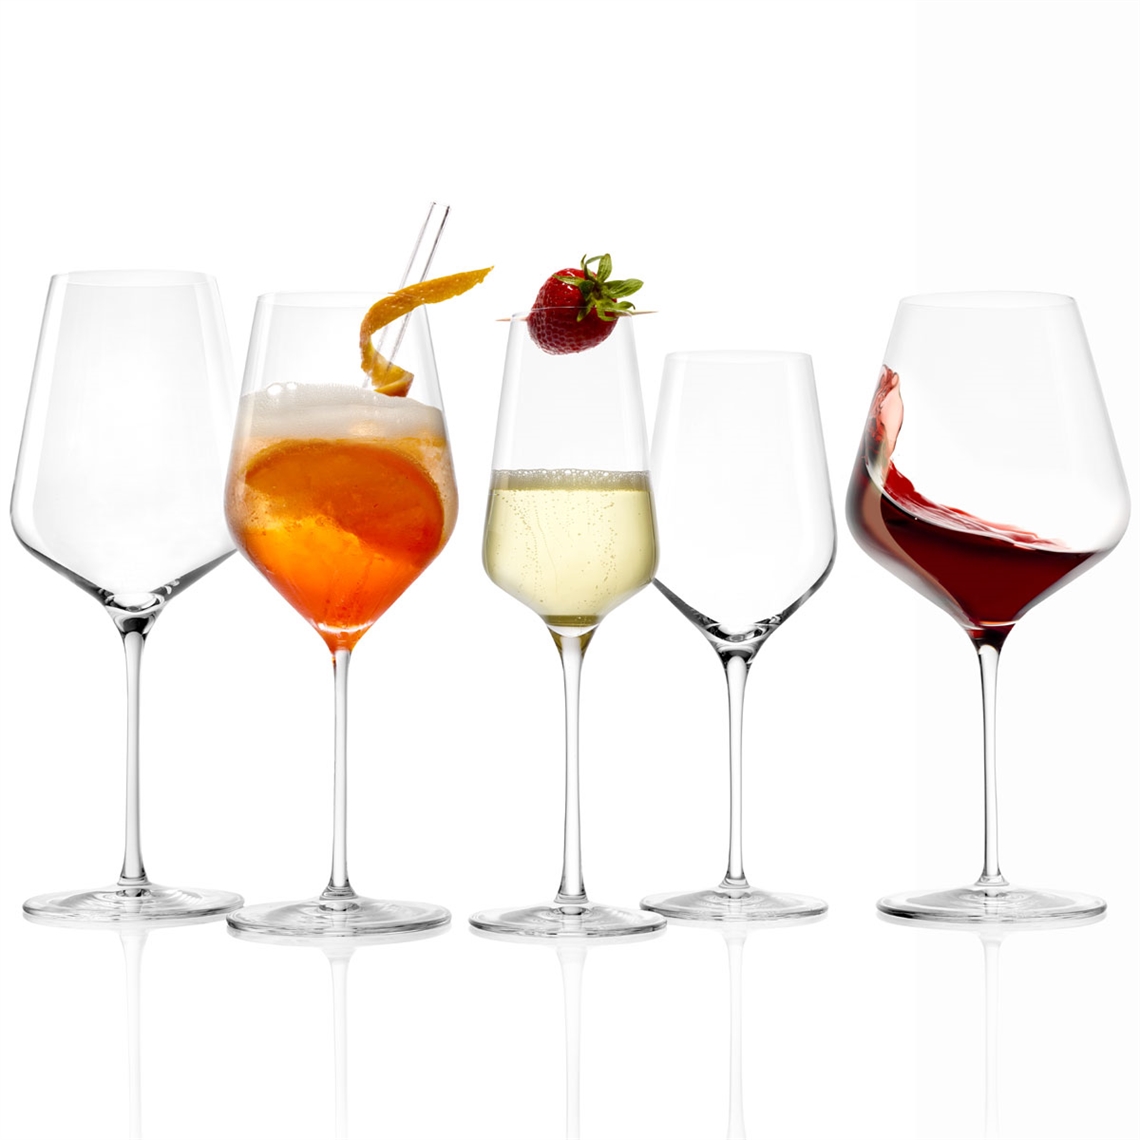 Stolzle STARlight Champagne / Sparkling Wine Glass - Set of 6